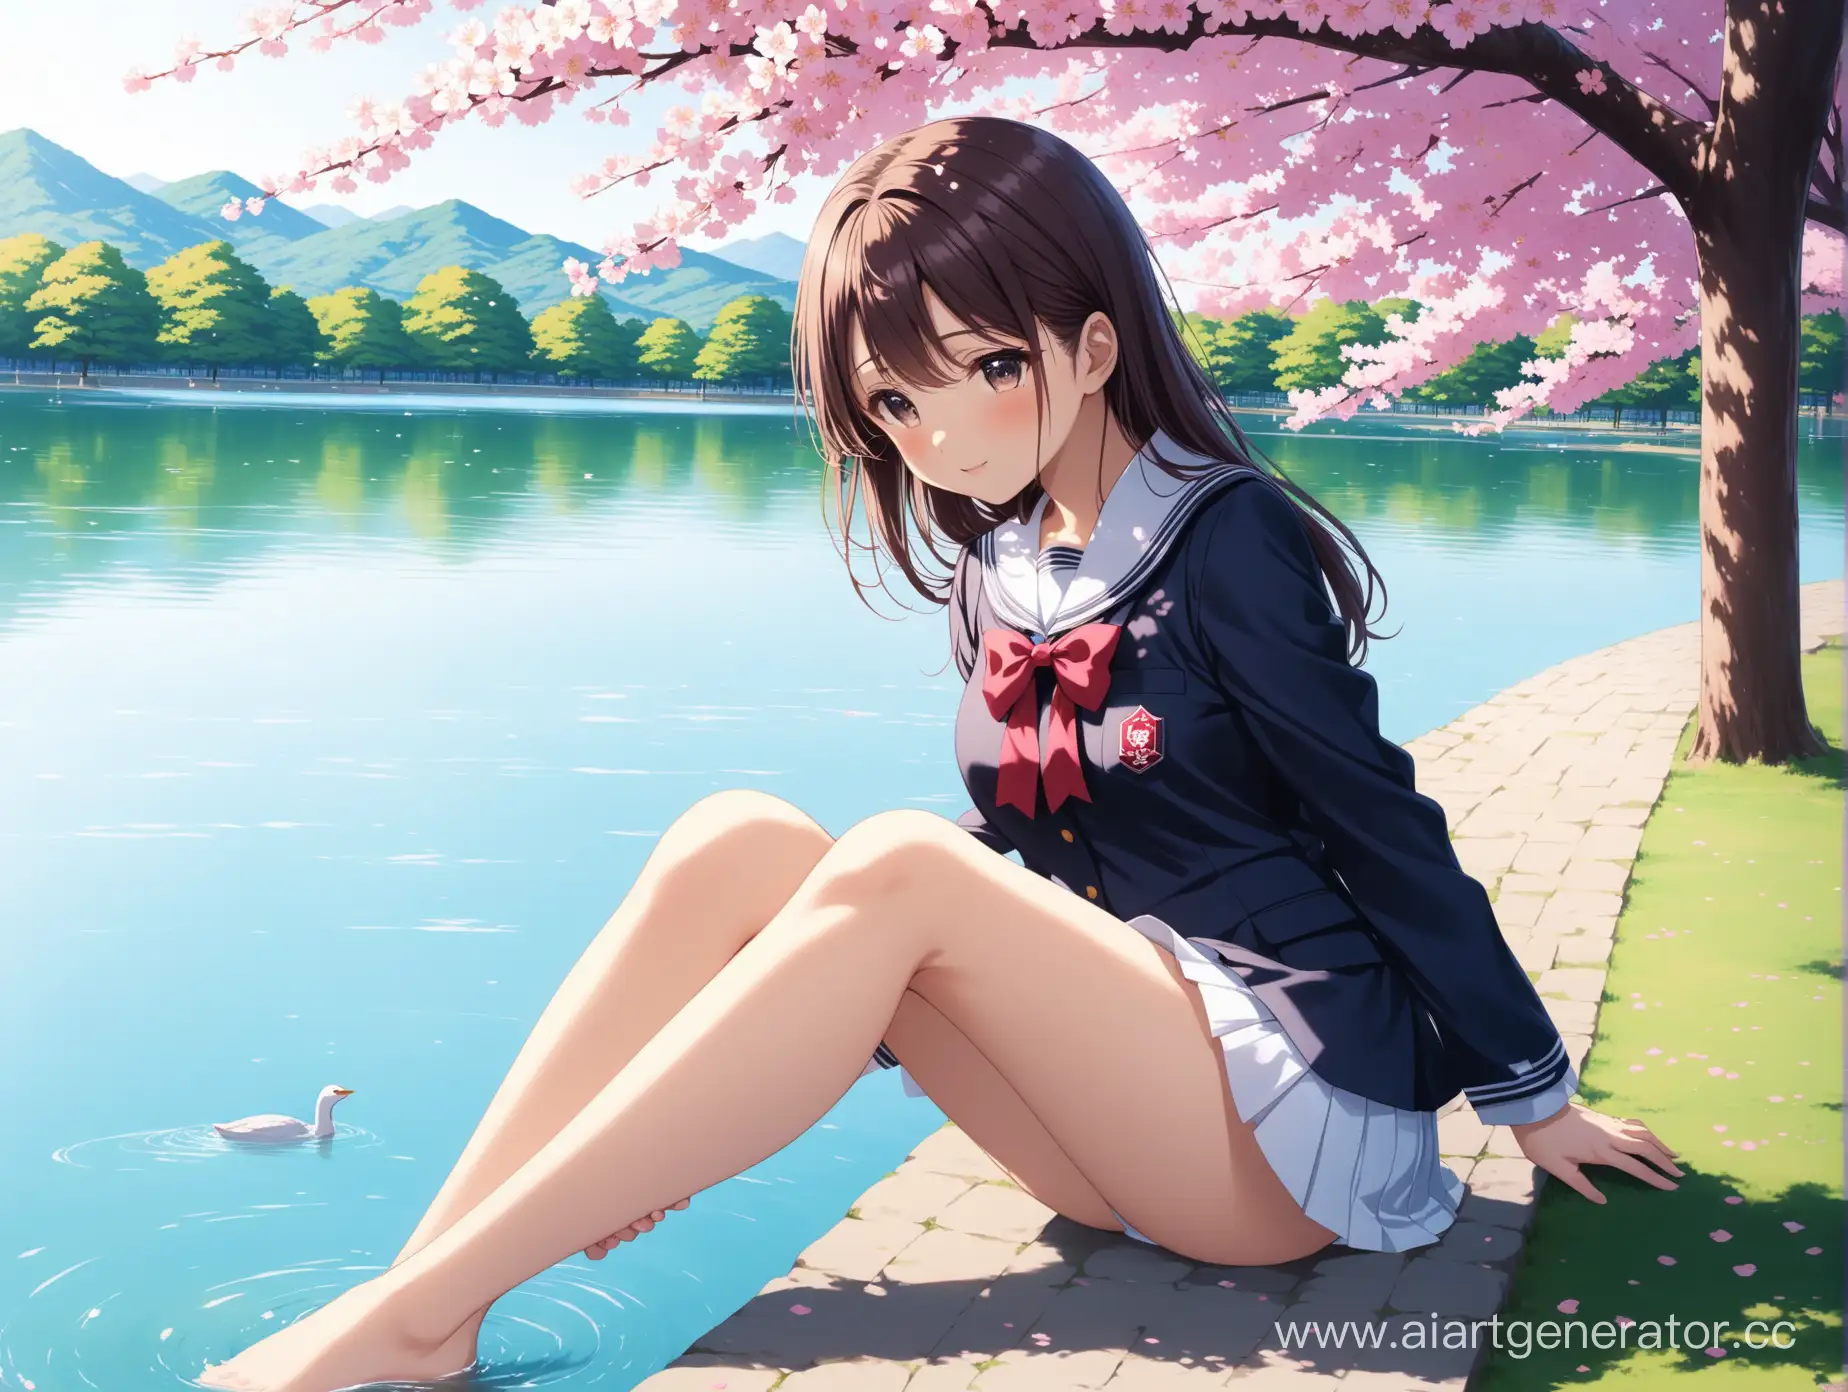 Japanese-Schoolgirl-Relaxing-by-Sakura-Park-Lake-in-Uniform